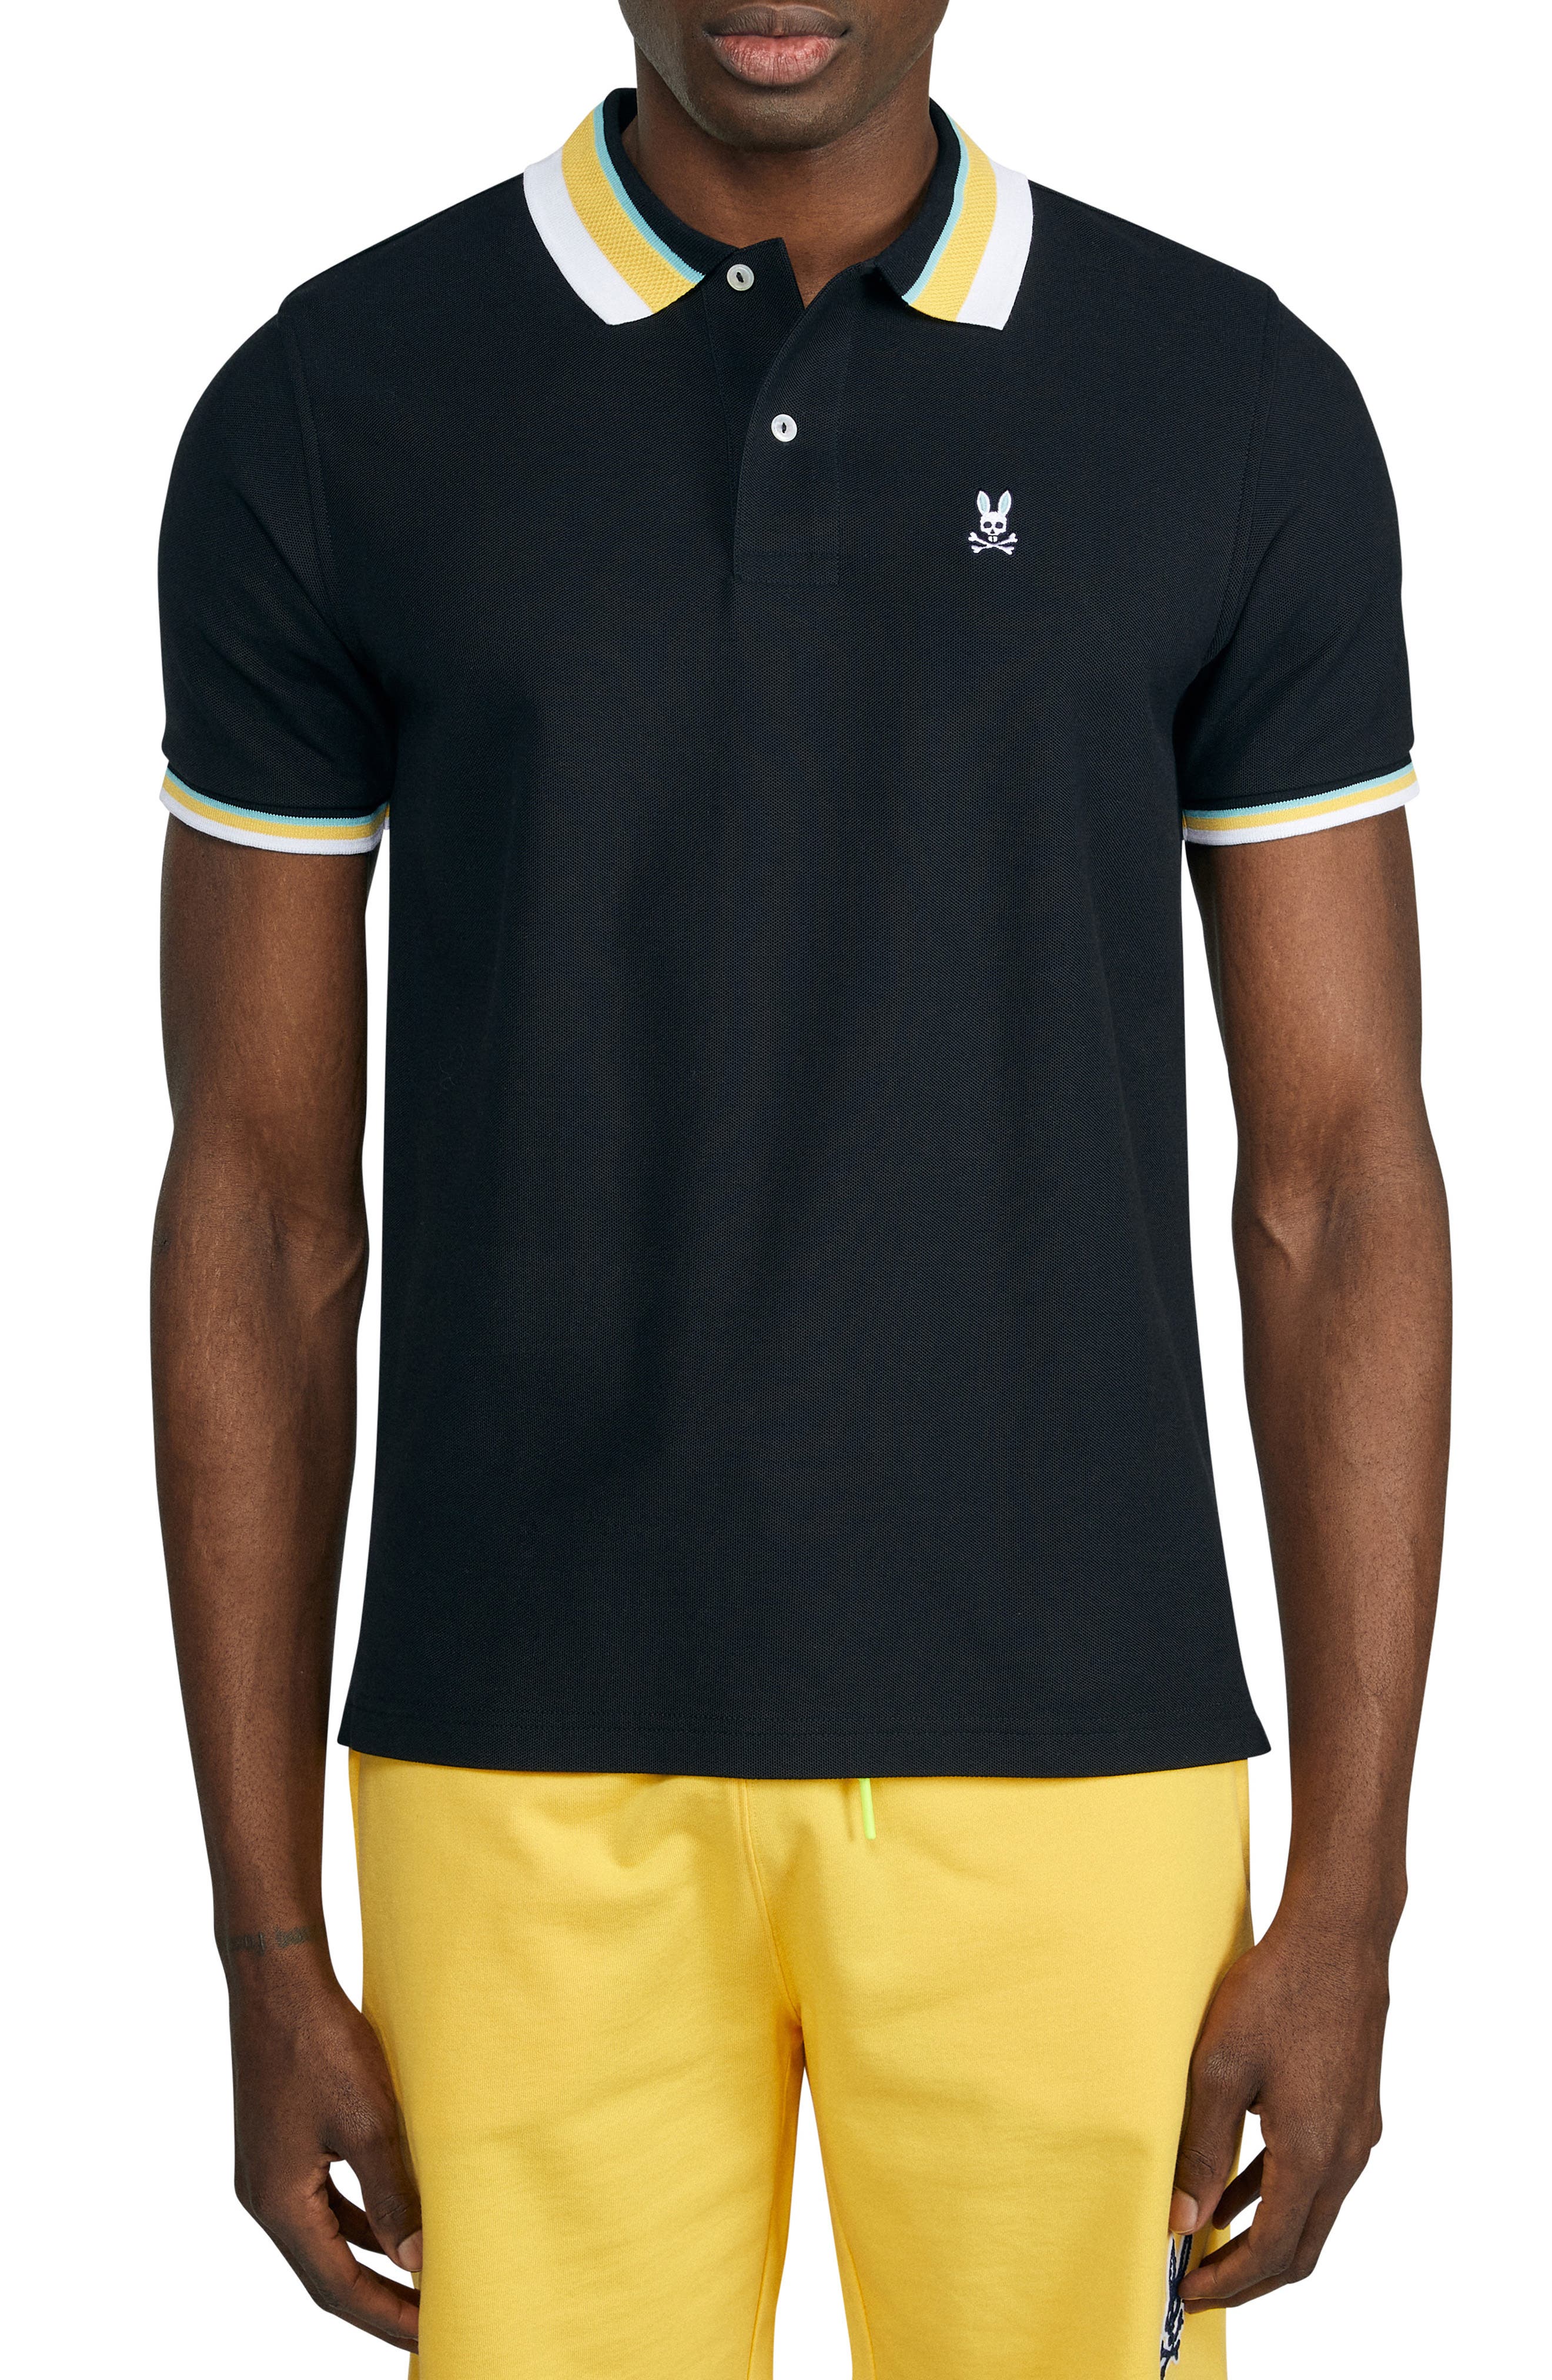 Andrew Scott Basics 2 Pack Girls' Short Sleeve Pique Polo Shirts/School Uniform Polo Shirts 